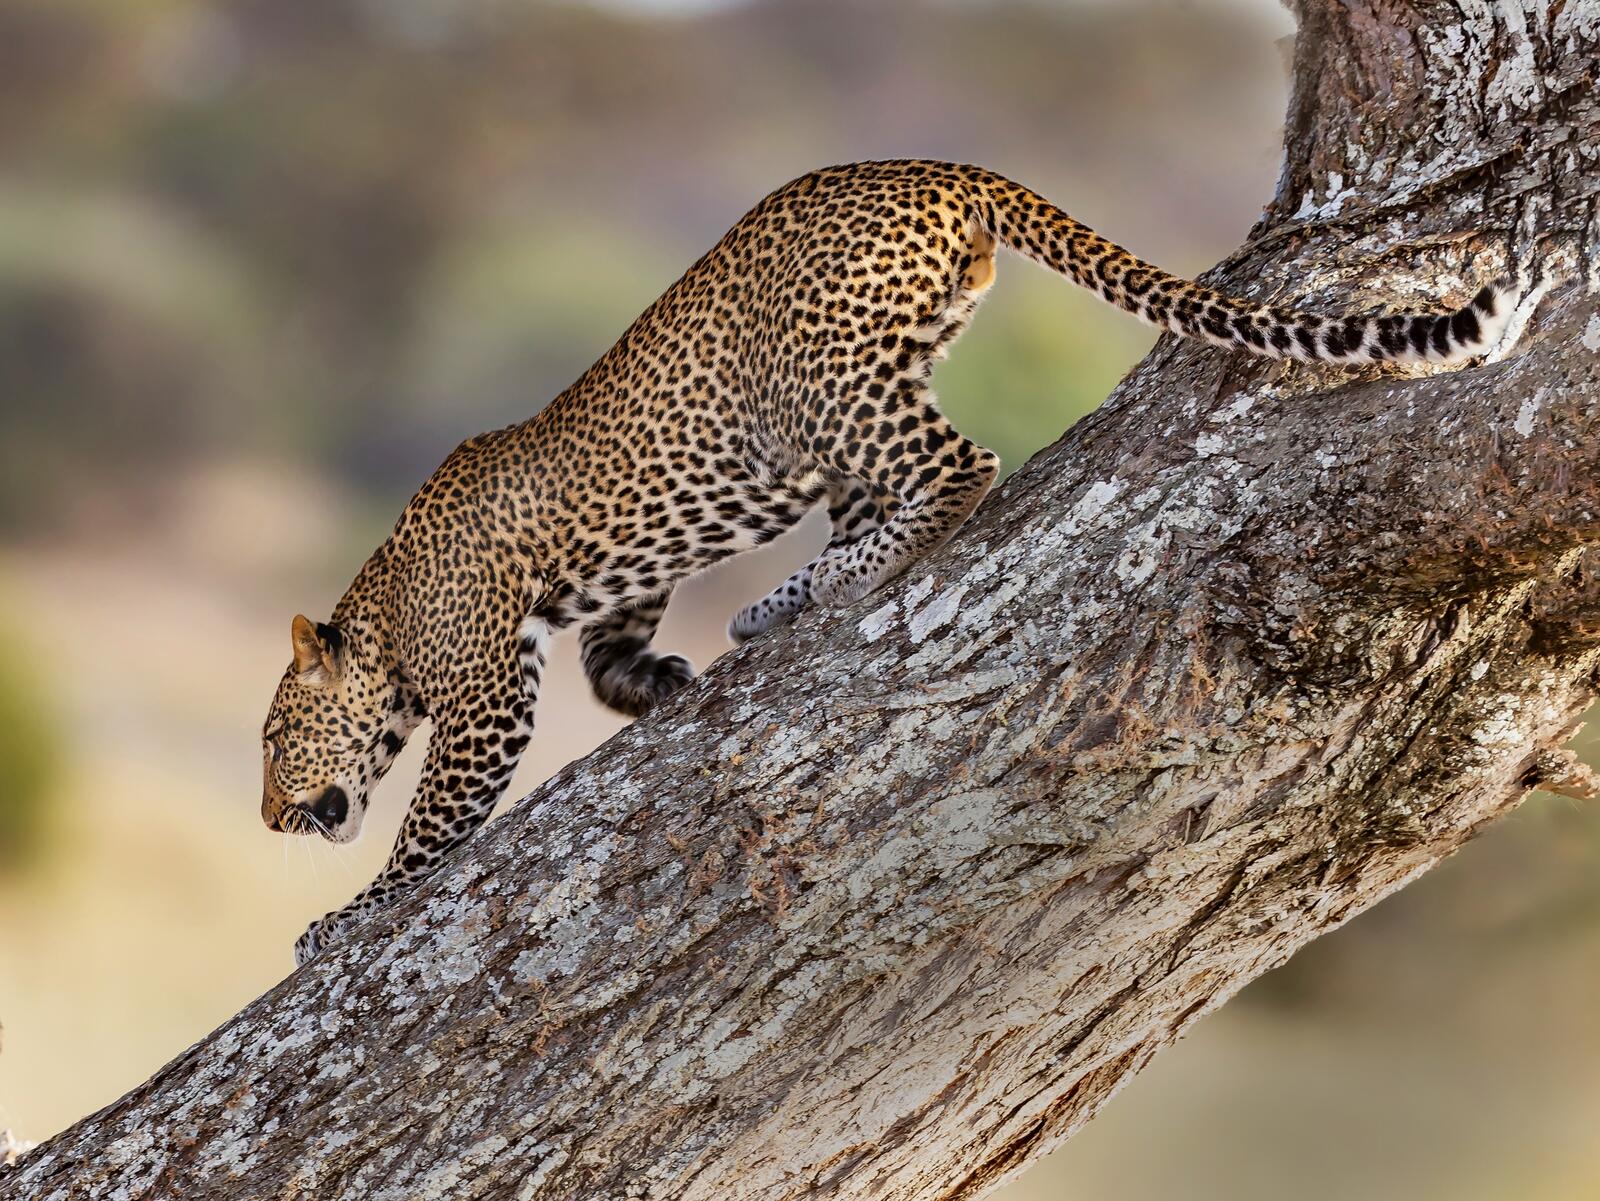 Wallpapers leopard climbing tree on the desktop